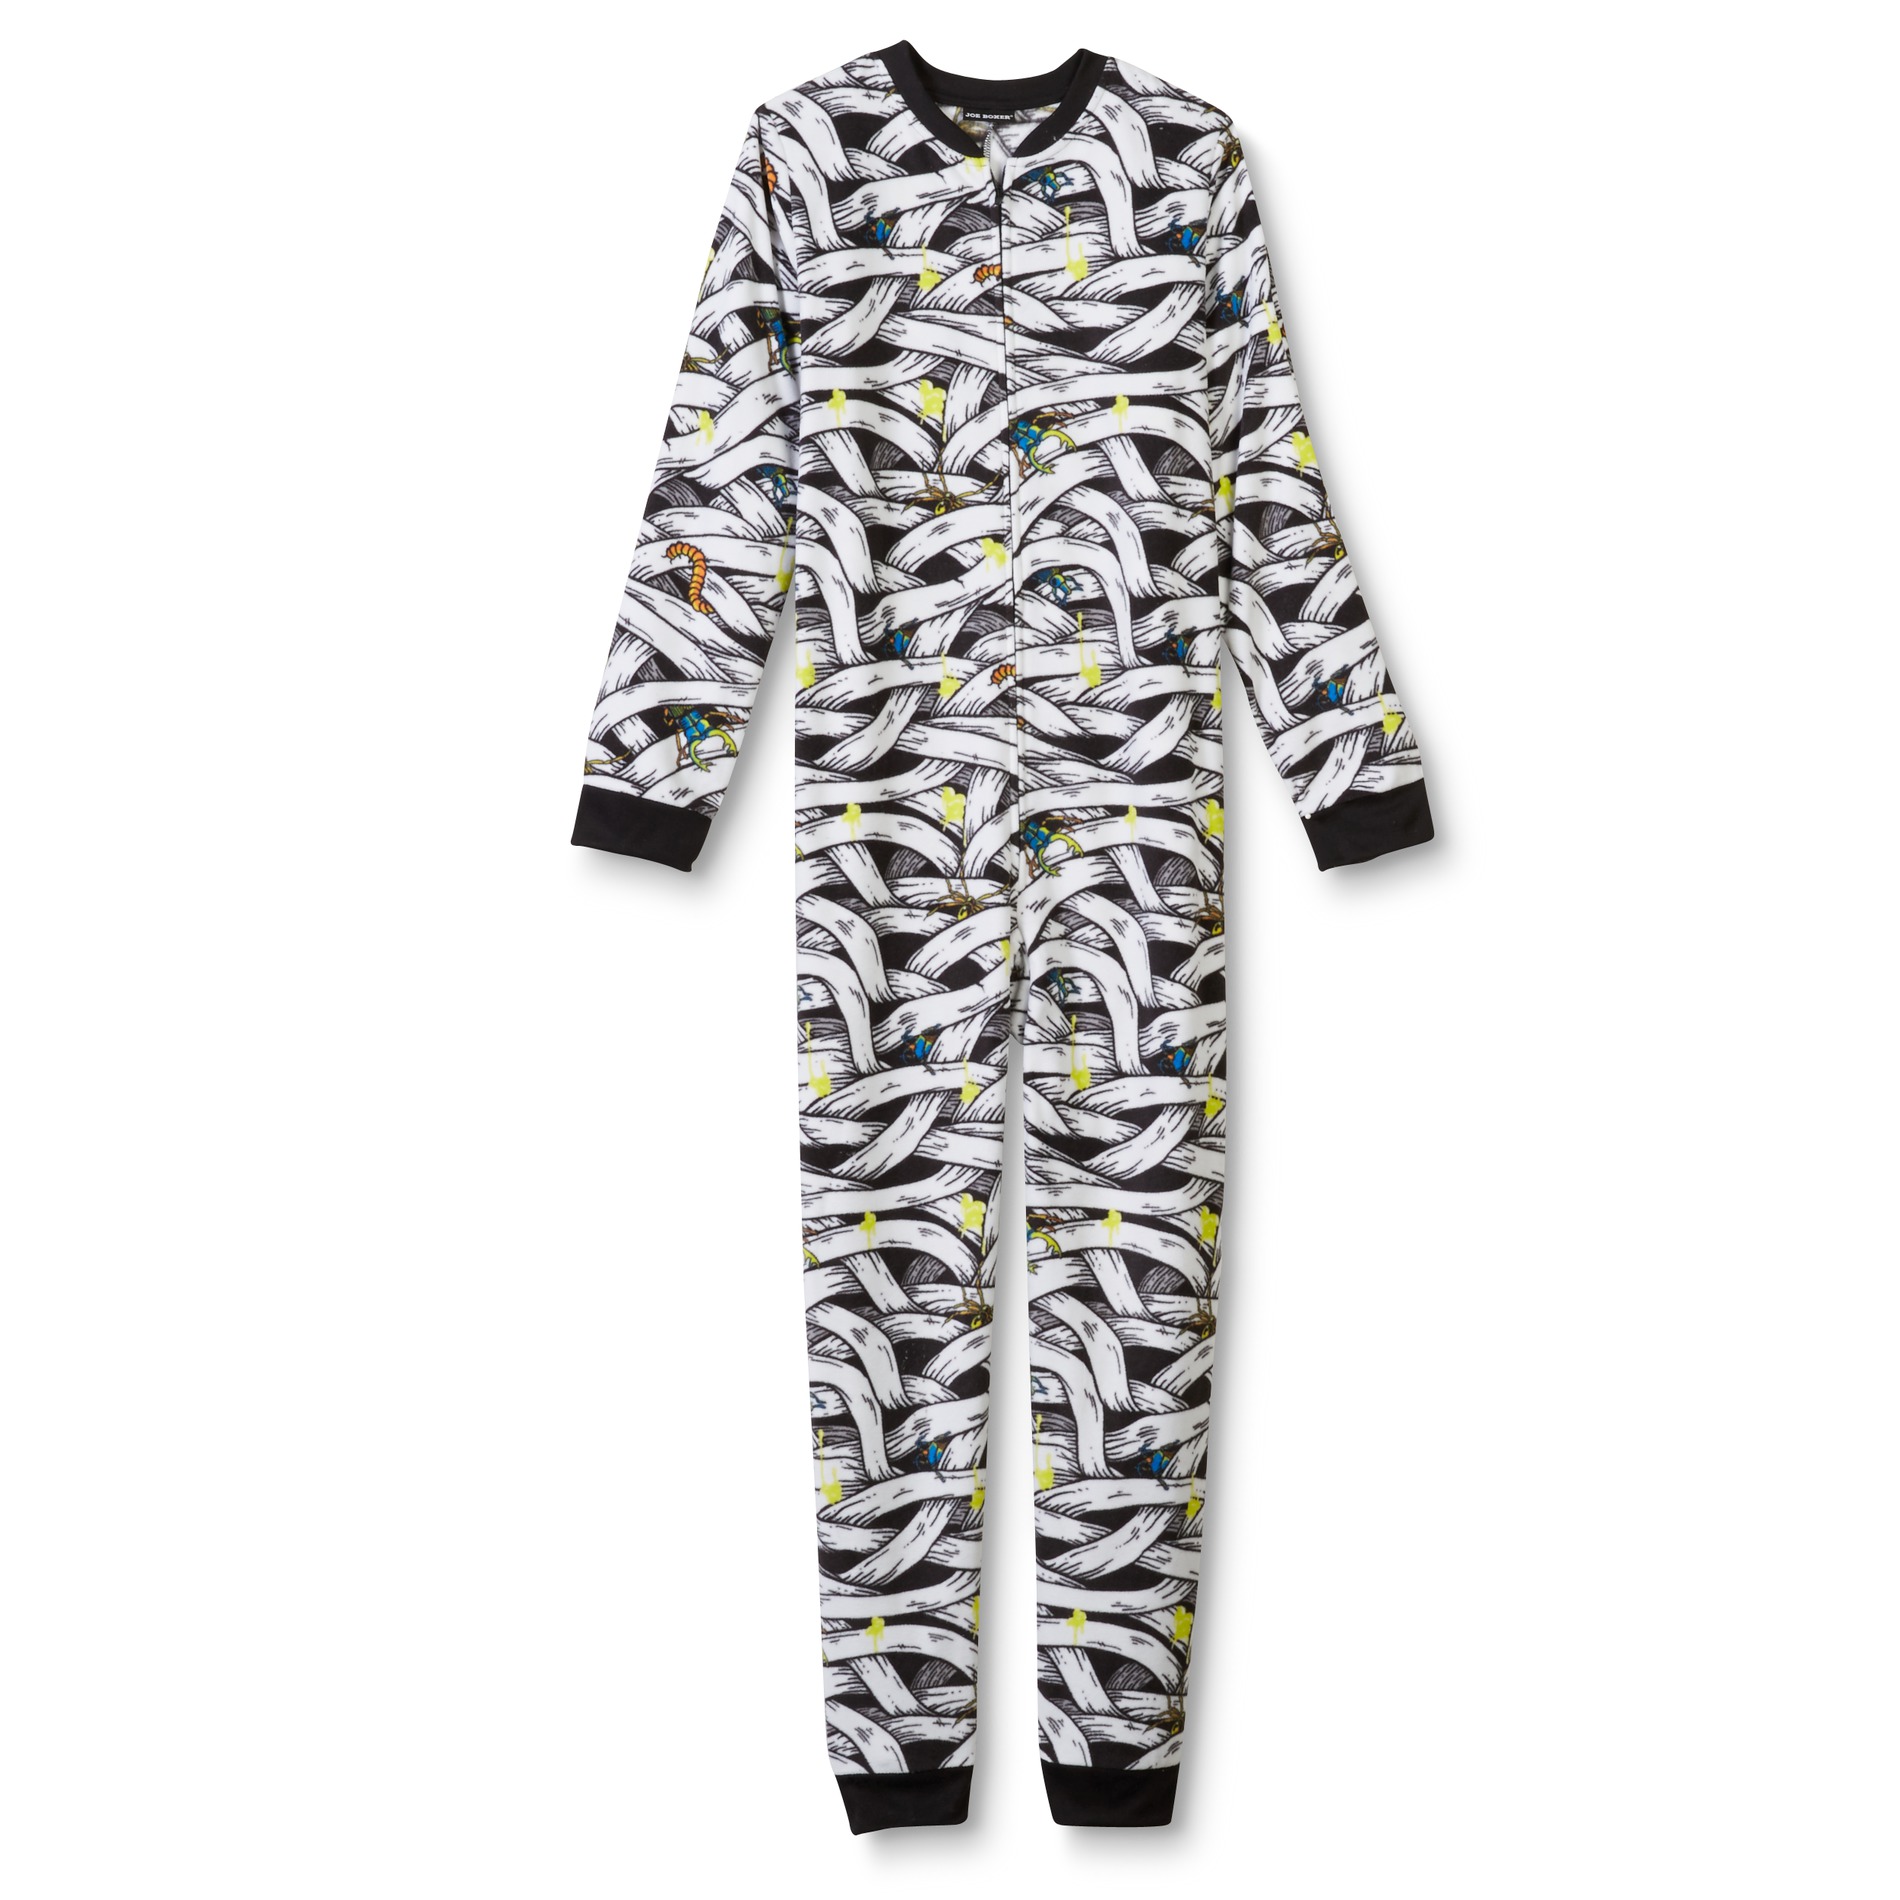 Joe Boxer Boy's One-Piece Fleece Pajamas - Mummy